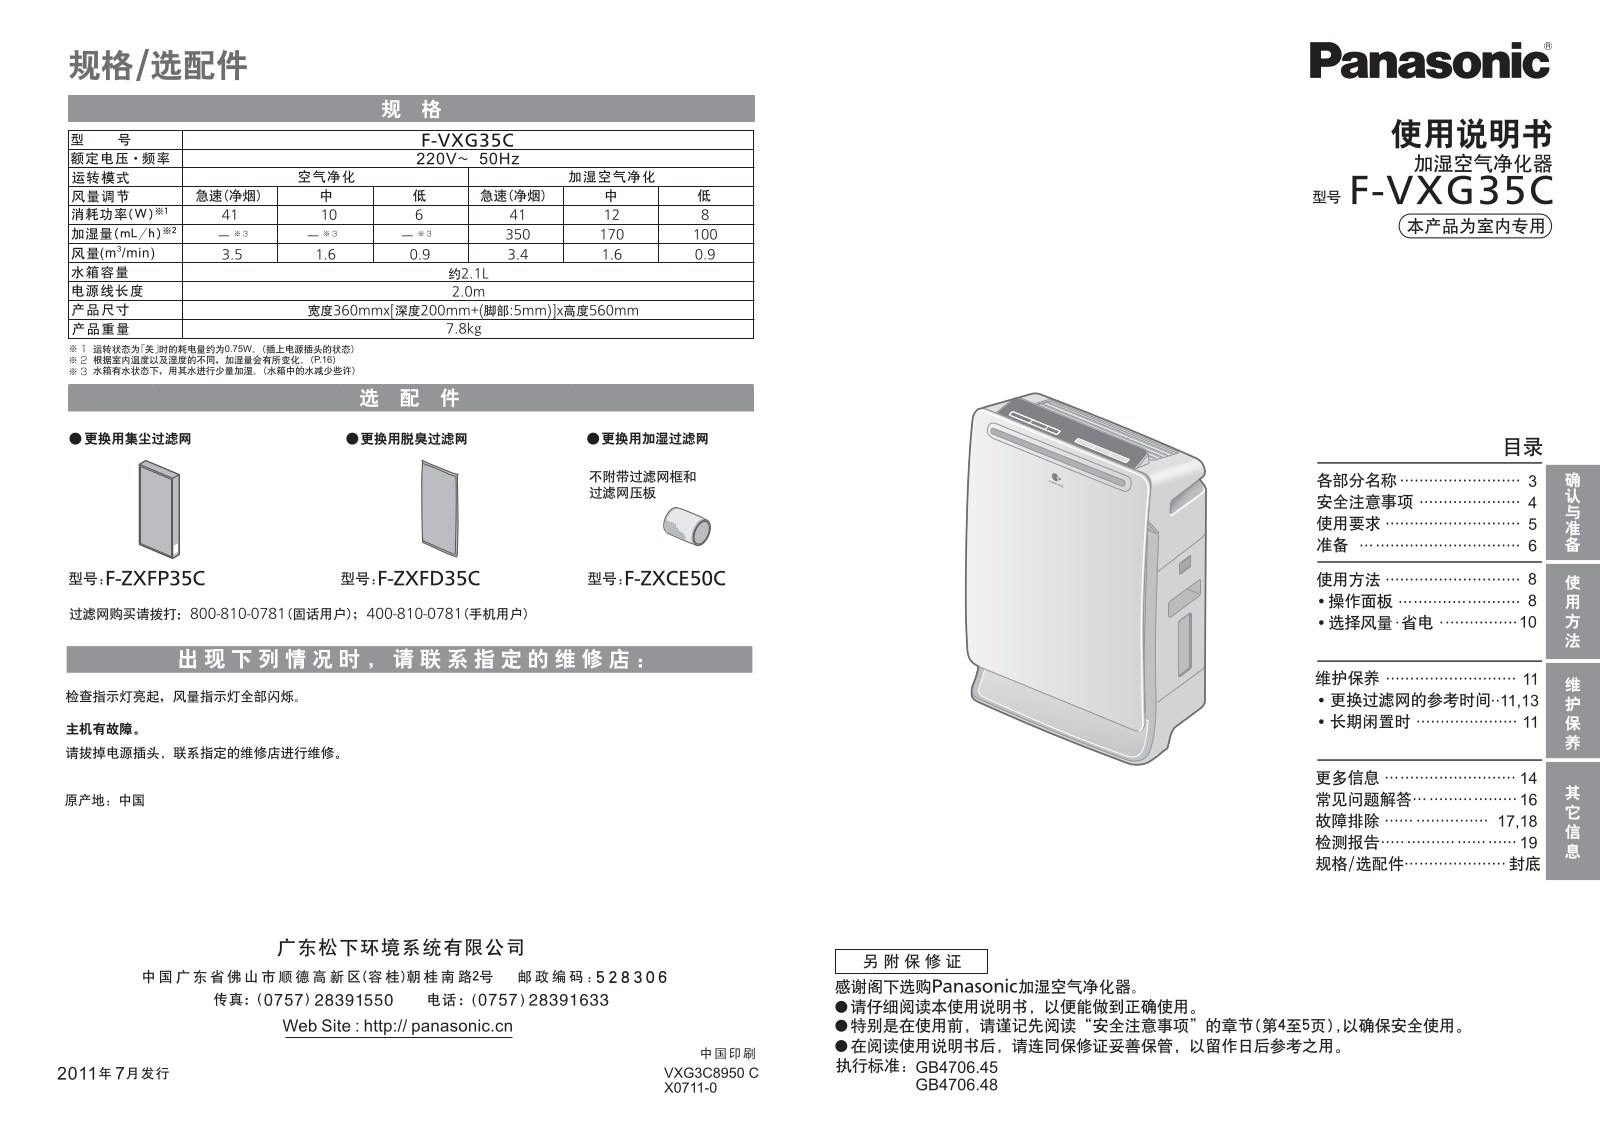 Panasonic F-VXG35C User Manual